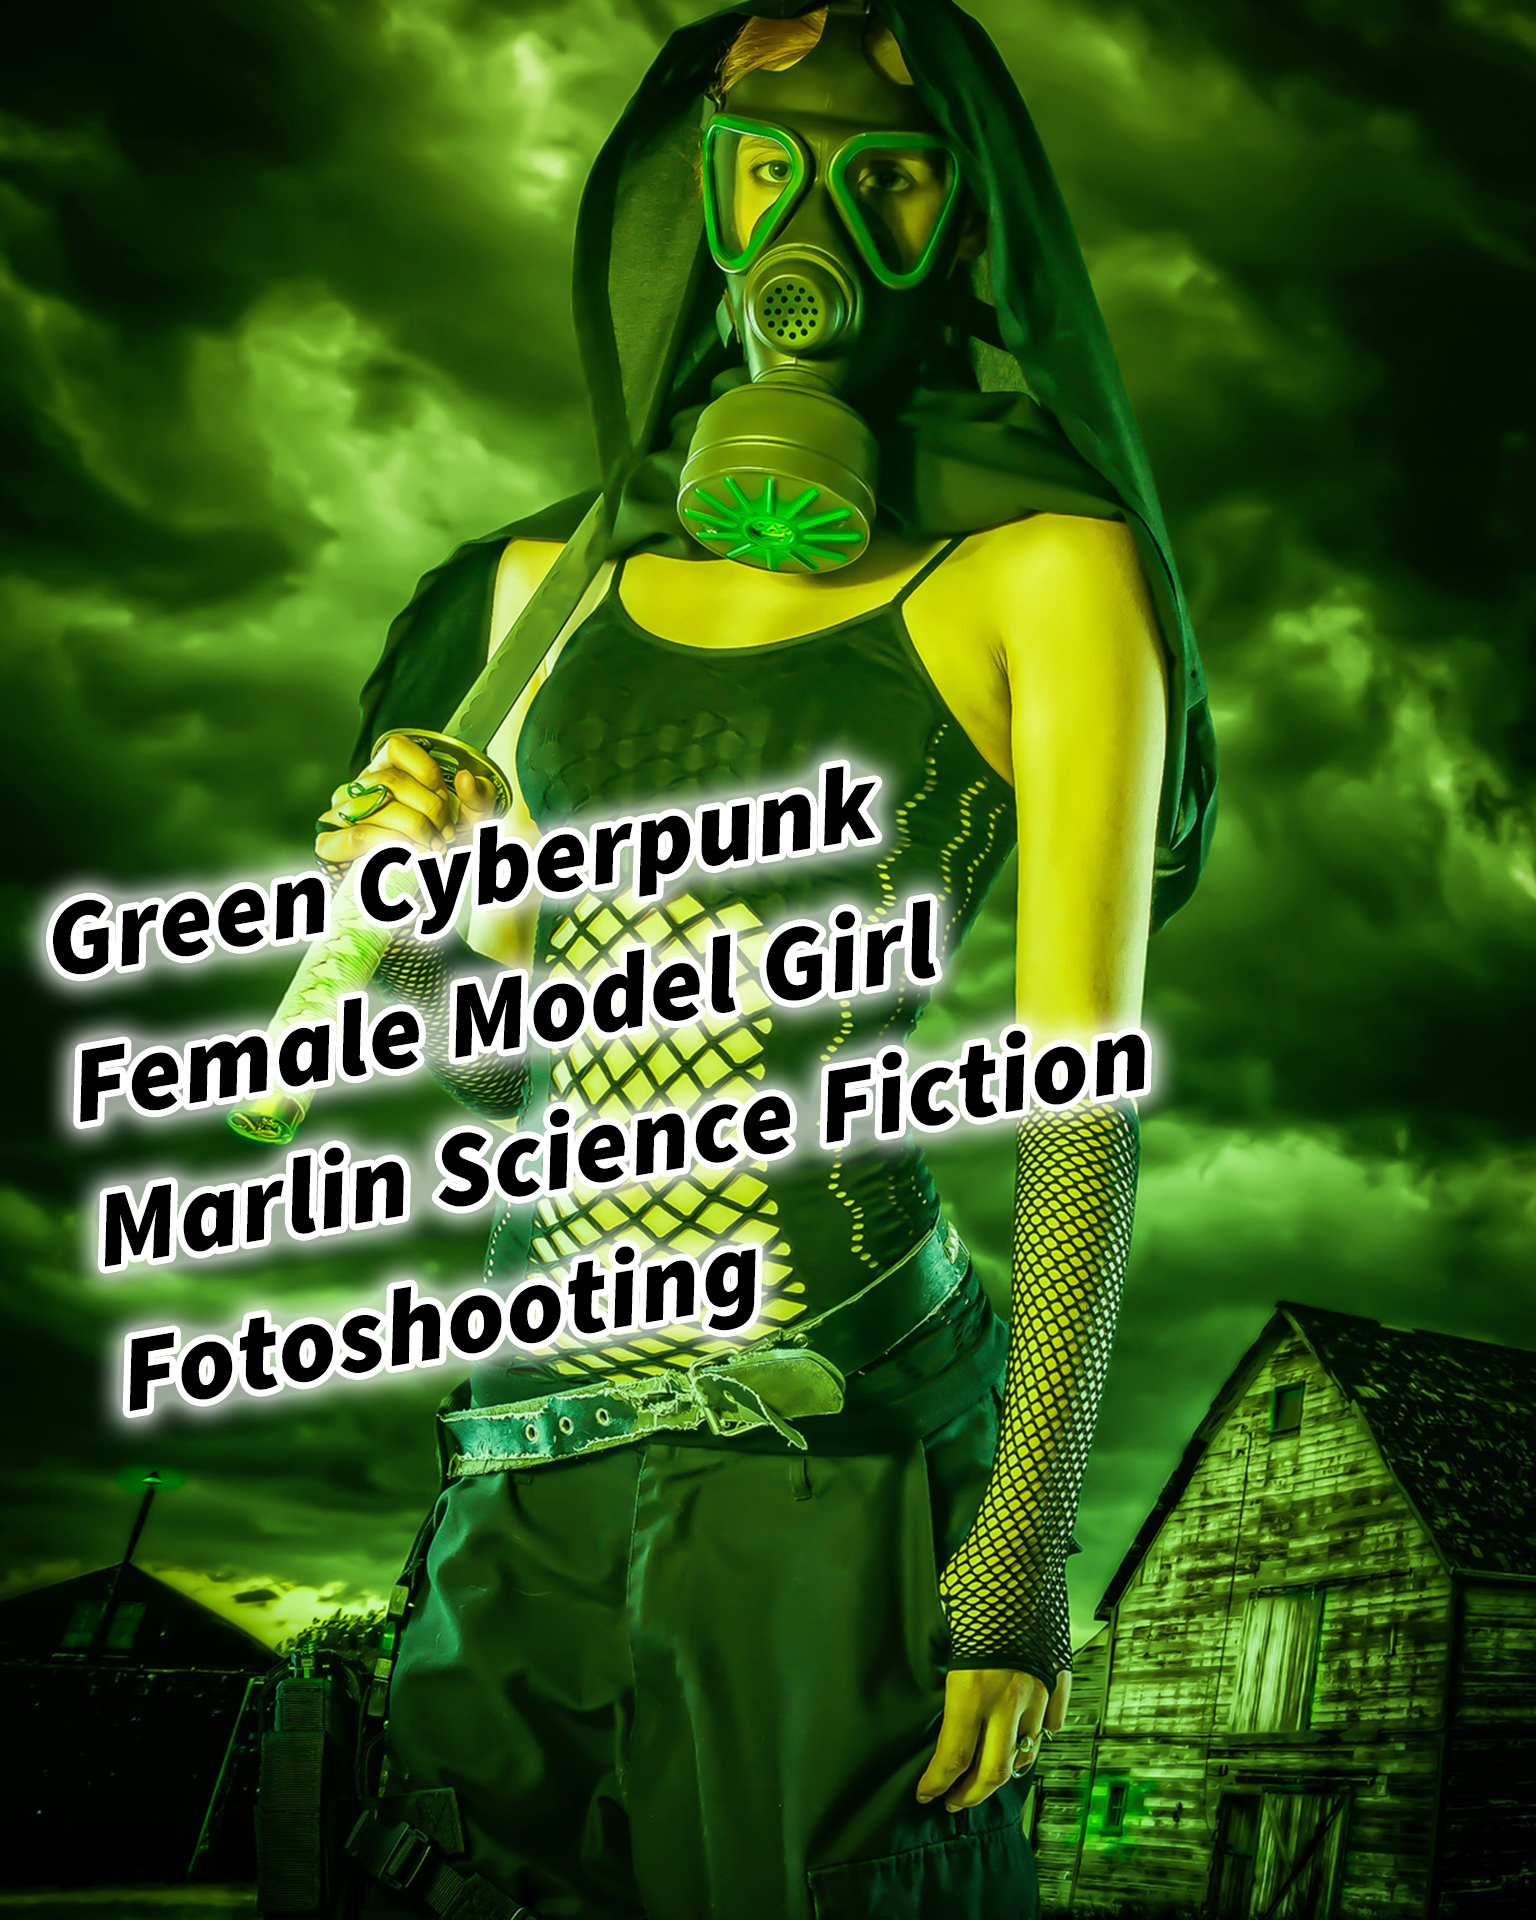 Green Cyberpunk Female Model Girl Marlin Science Fiction Fotoshooting